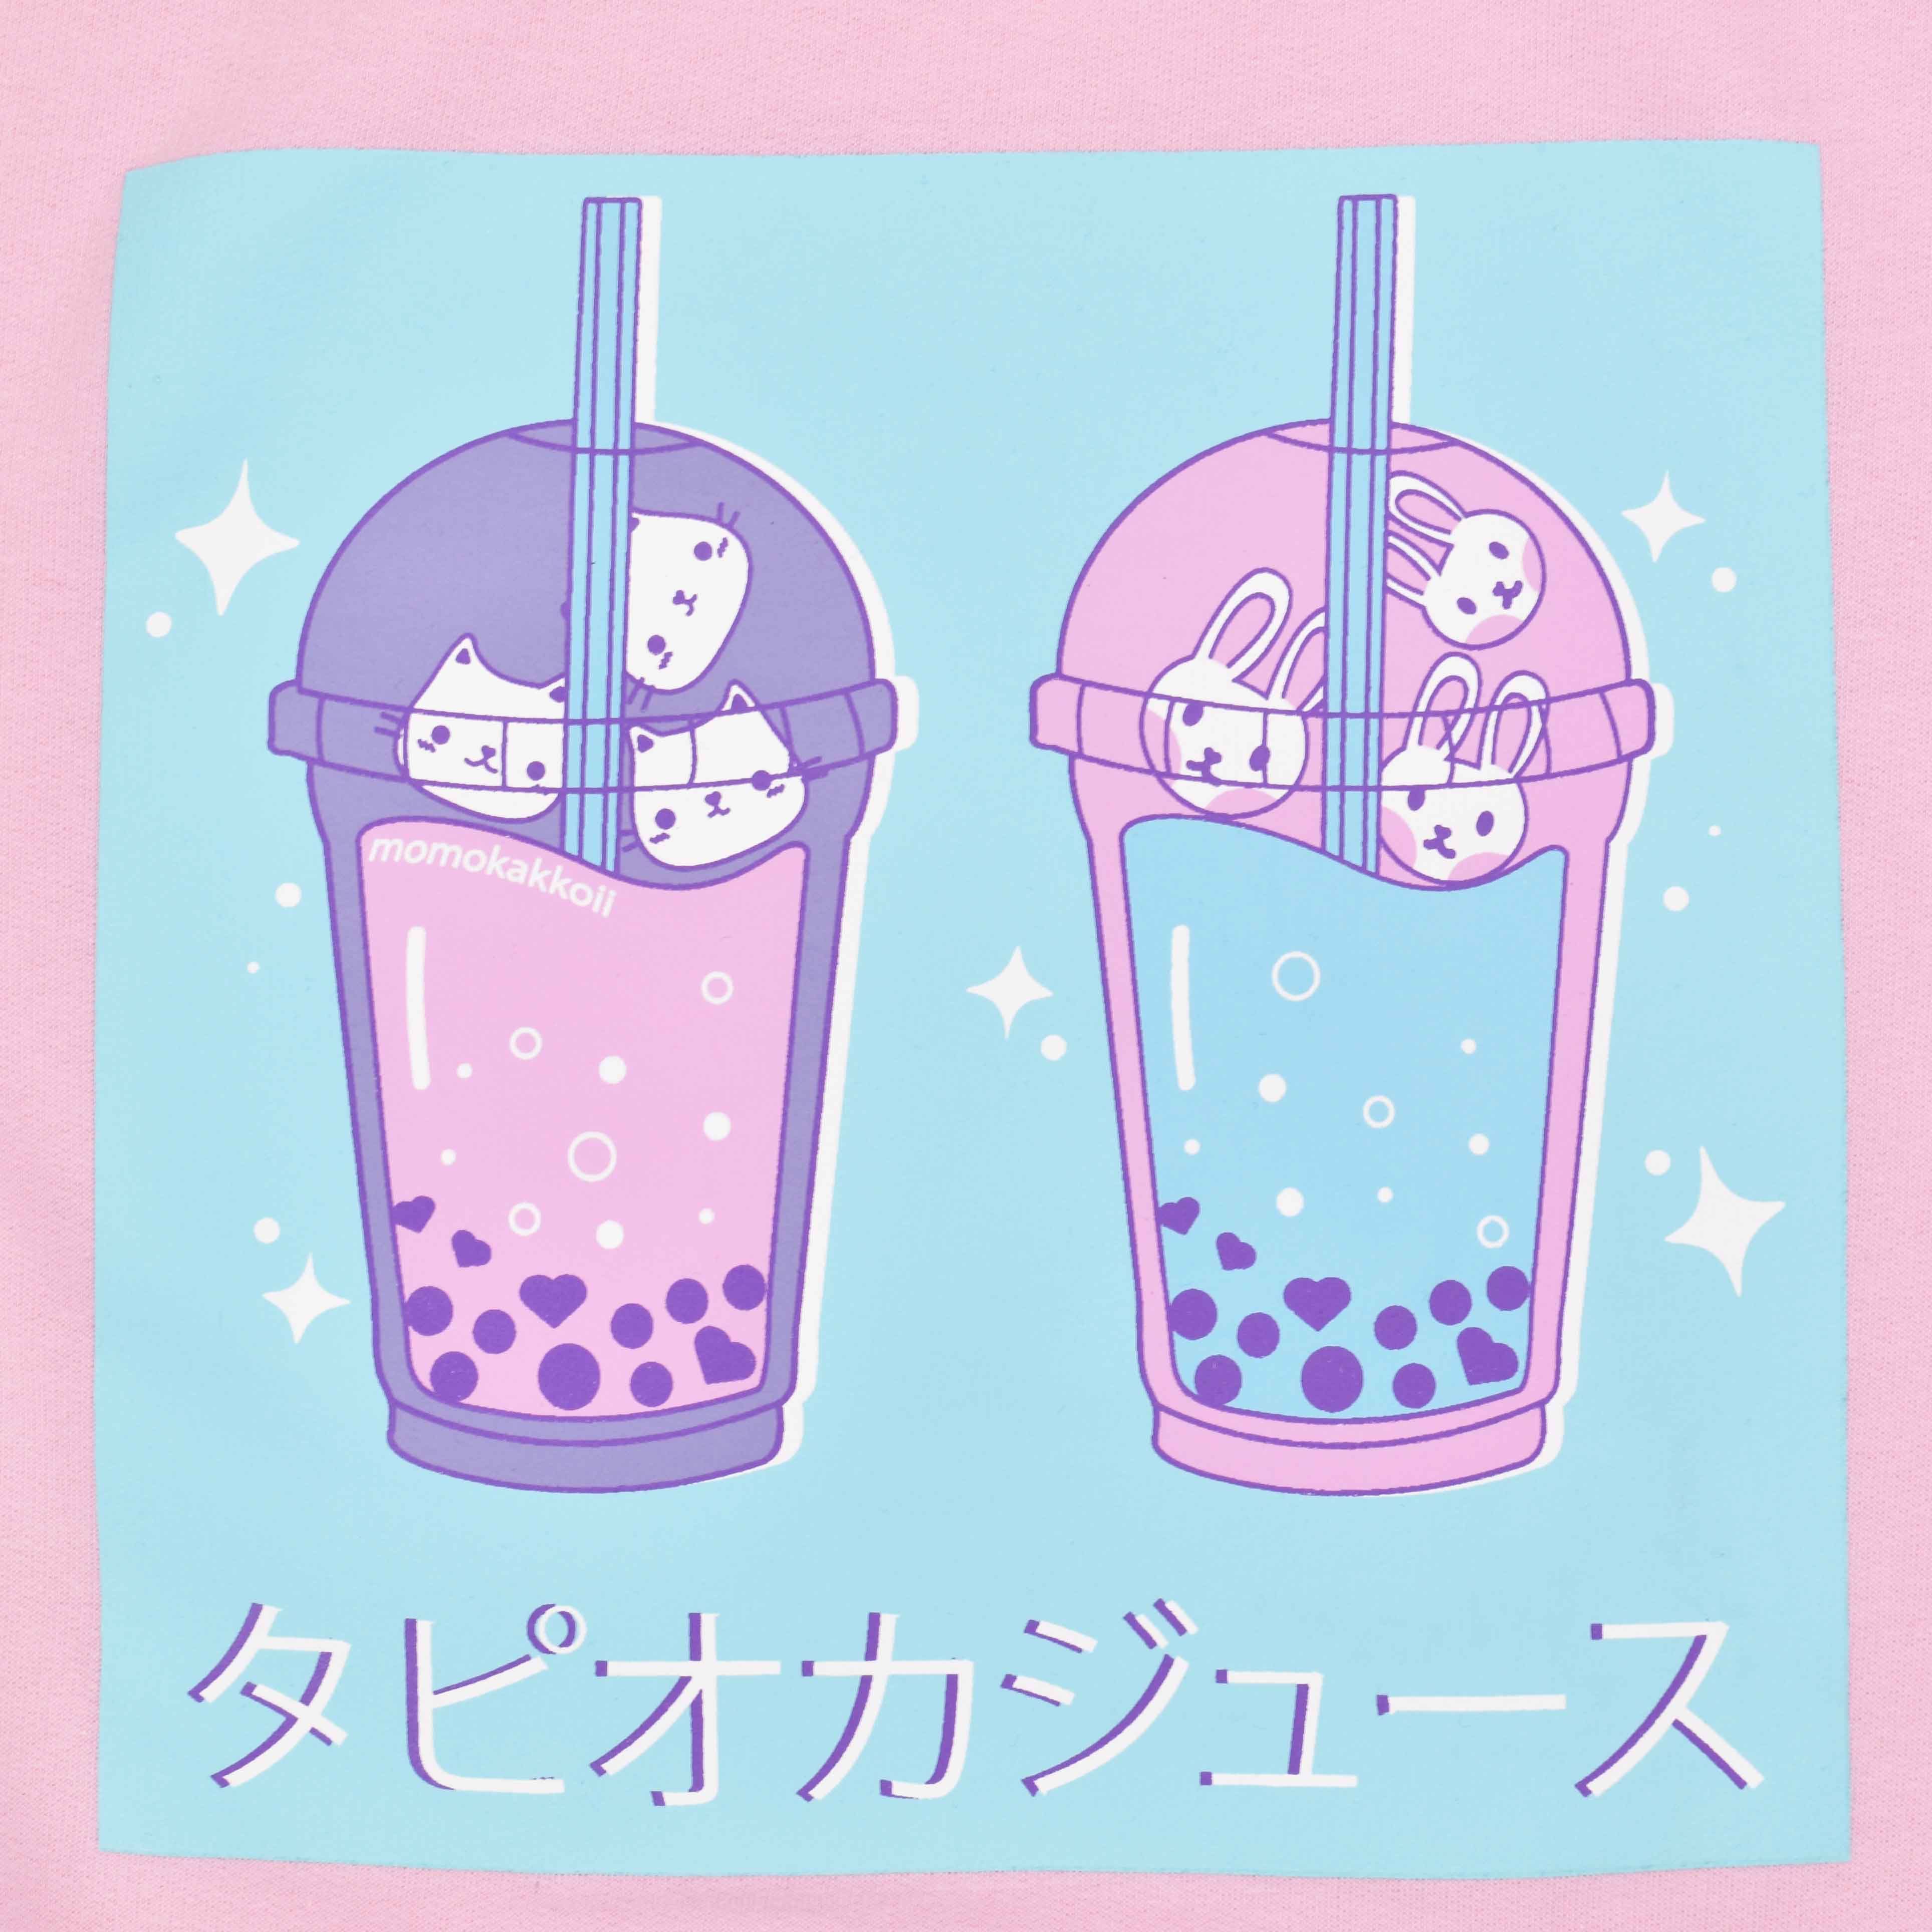 ♡ Kawaii Animals Pastel Boba Bubble Tea Sweatshirt Soft Girl Crewneck Mori Tumblr by Momokakkoii ♡. Kawaii animals, Boba tea, Cute kawaii drawings